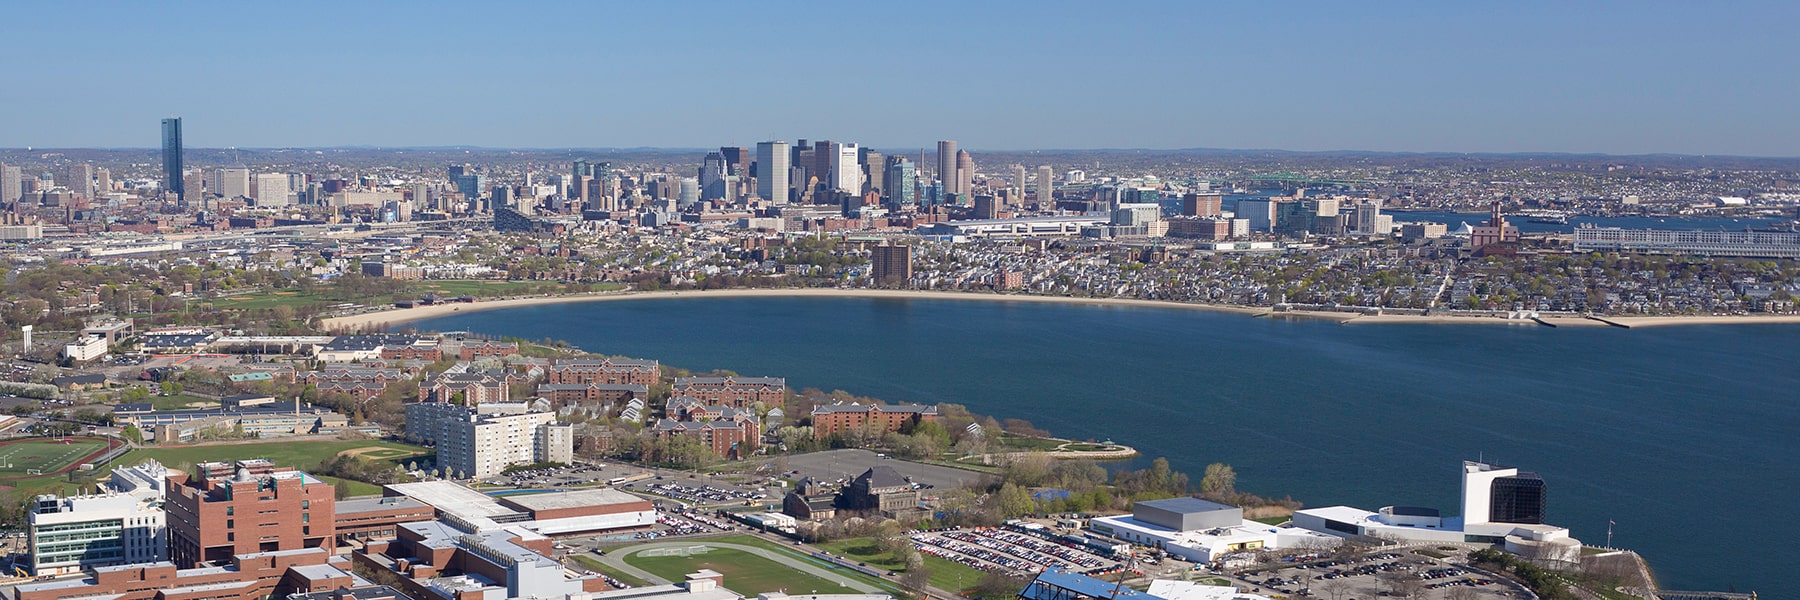 aerial view of Boston Harbor